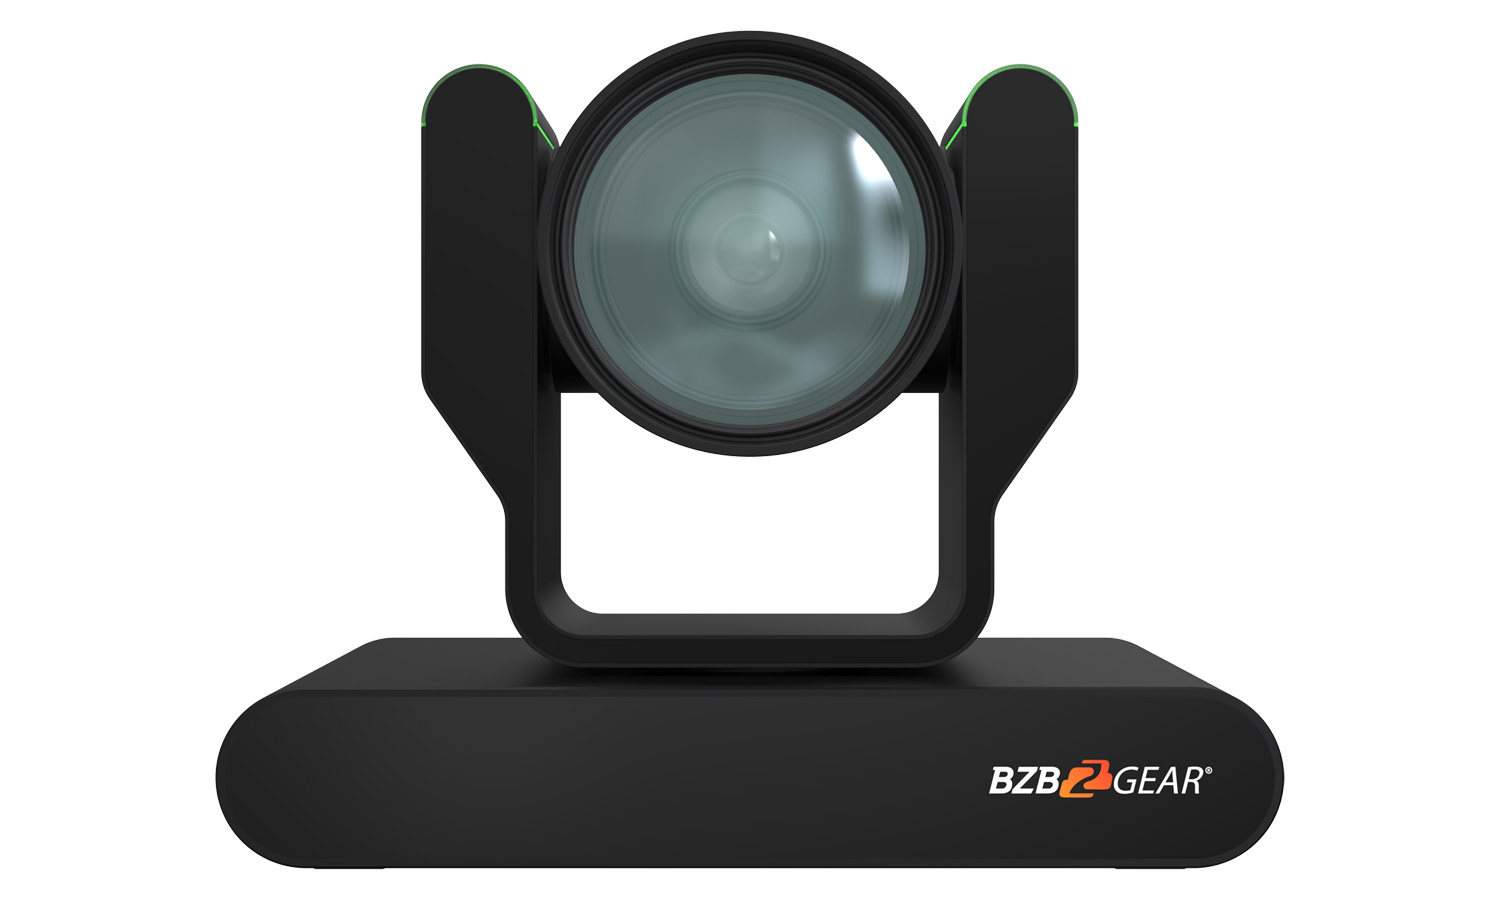 BG-ADAMO-4K12X-B 12X 4K@60Hz HDMI2.0/12G-SDI/USB 2.0/USB 3.0 Live Streaming PTZ Camera with Tally Lights (Black) by BZBGEAR